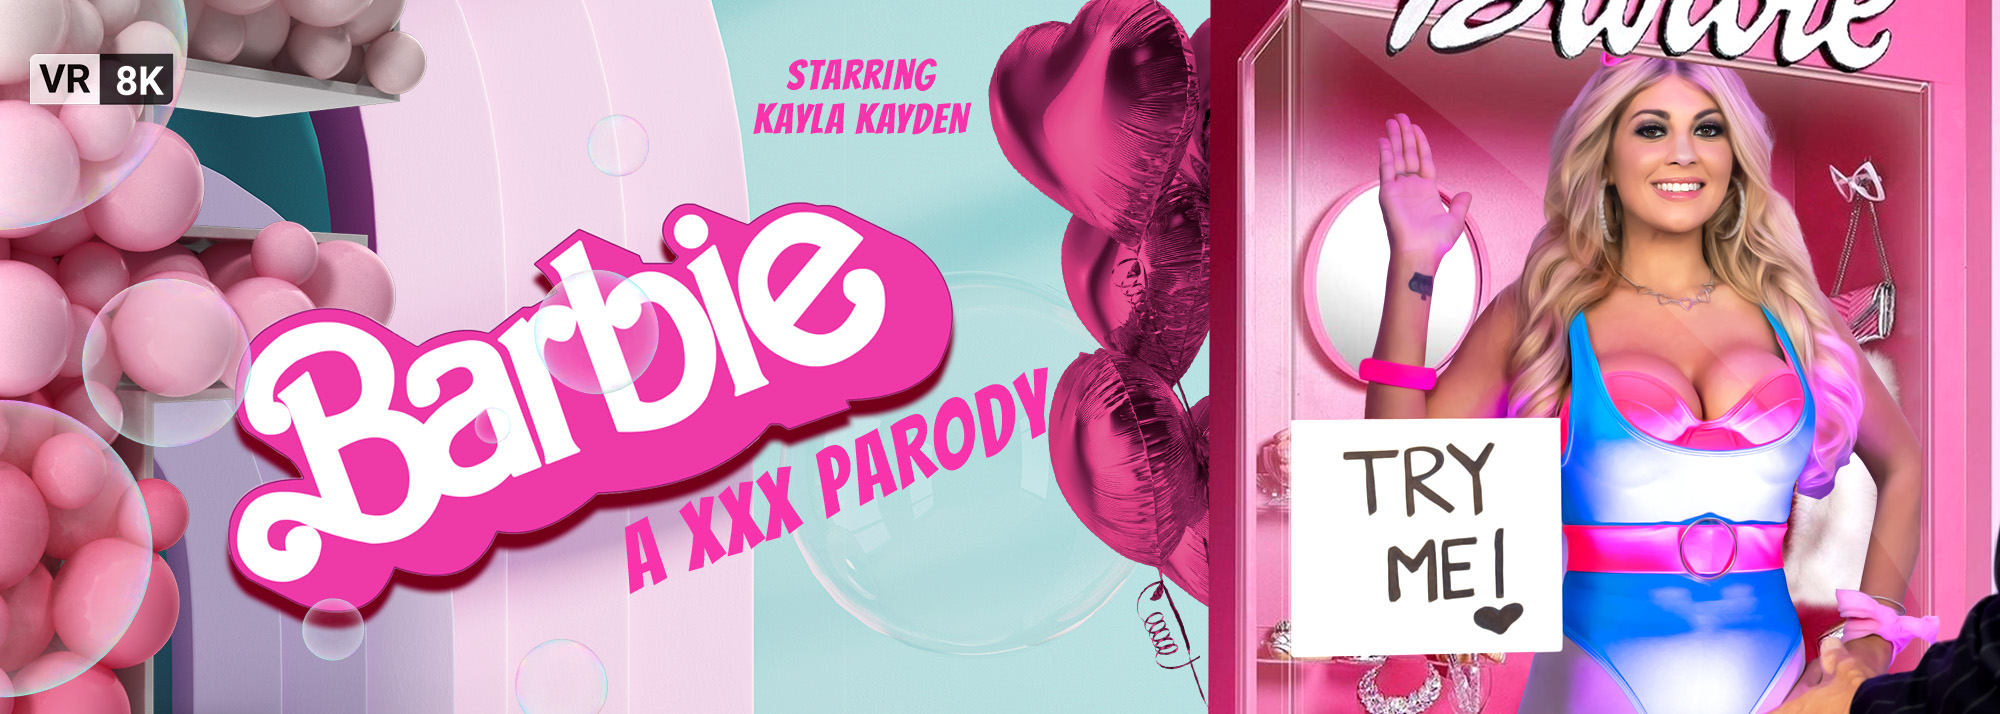 Barbie (A XXX Parody) - VR Porn Video, Starring: Kayla Kayden VR